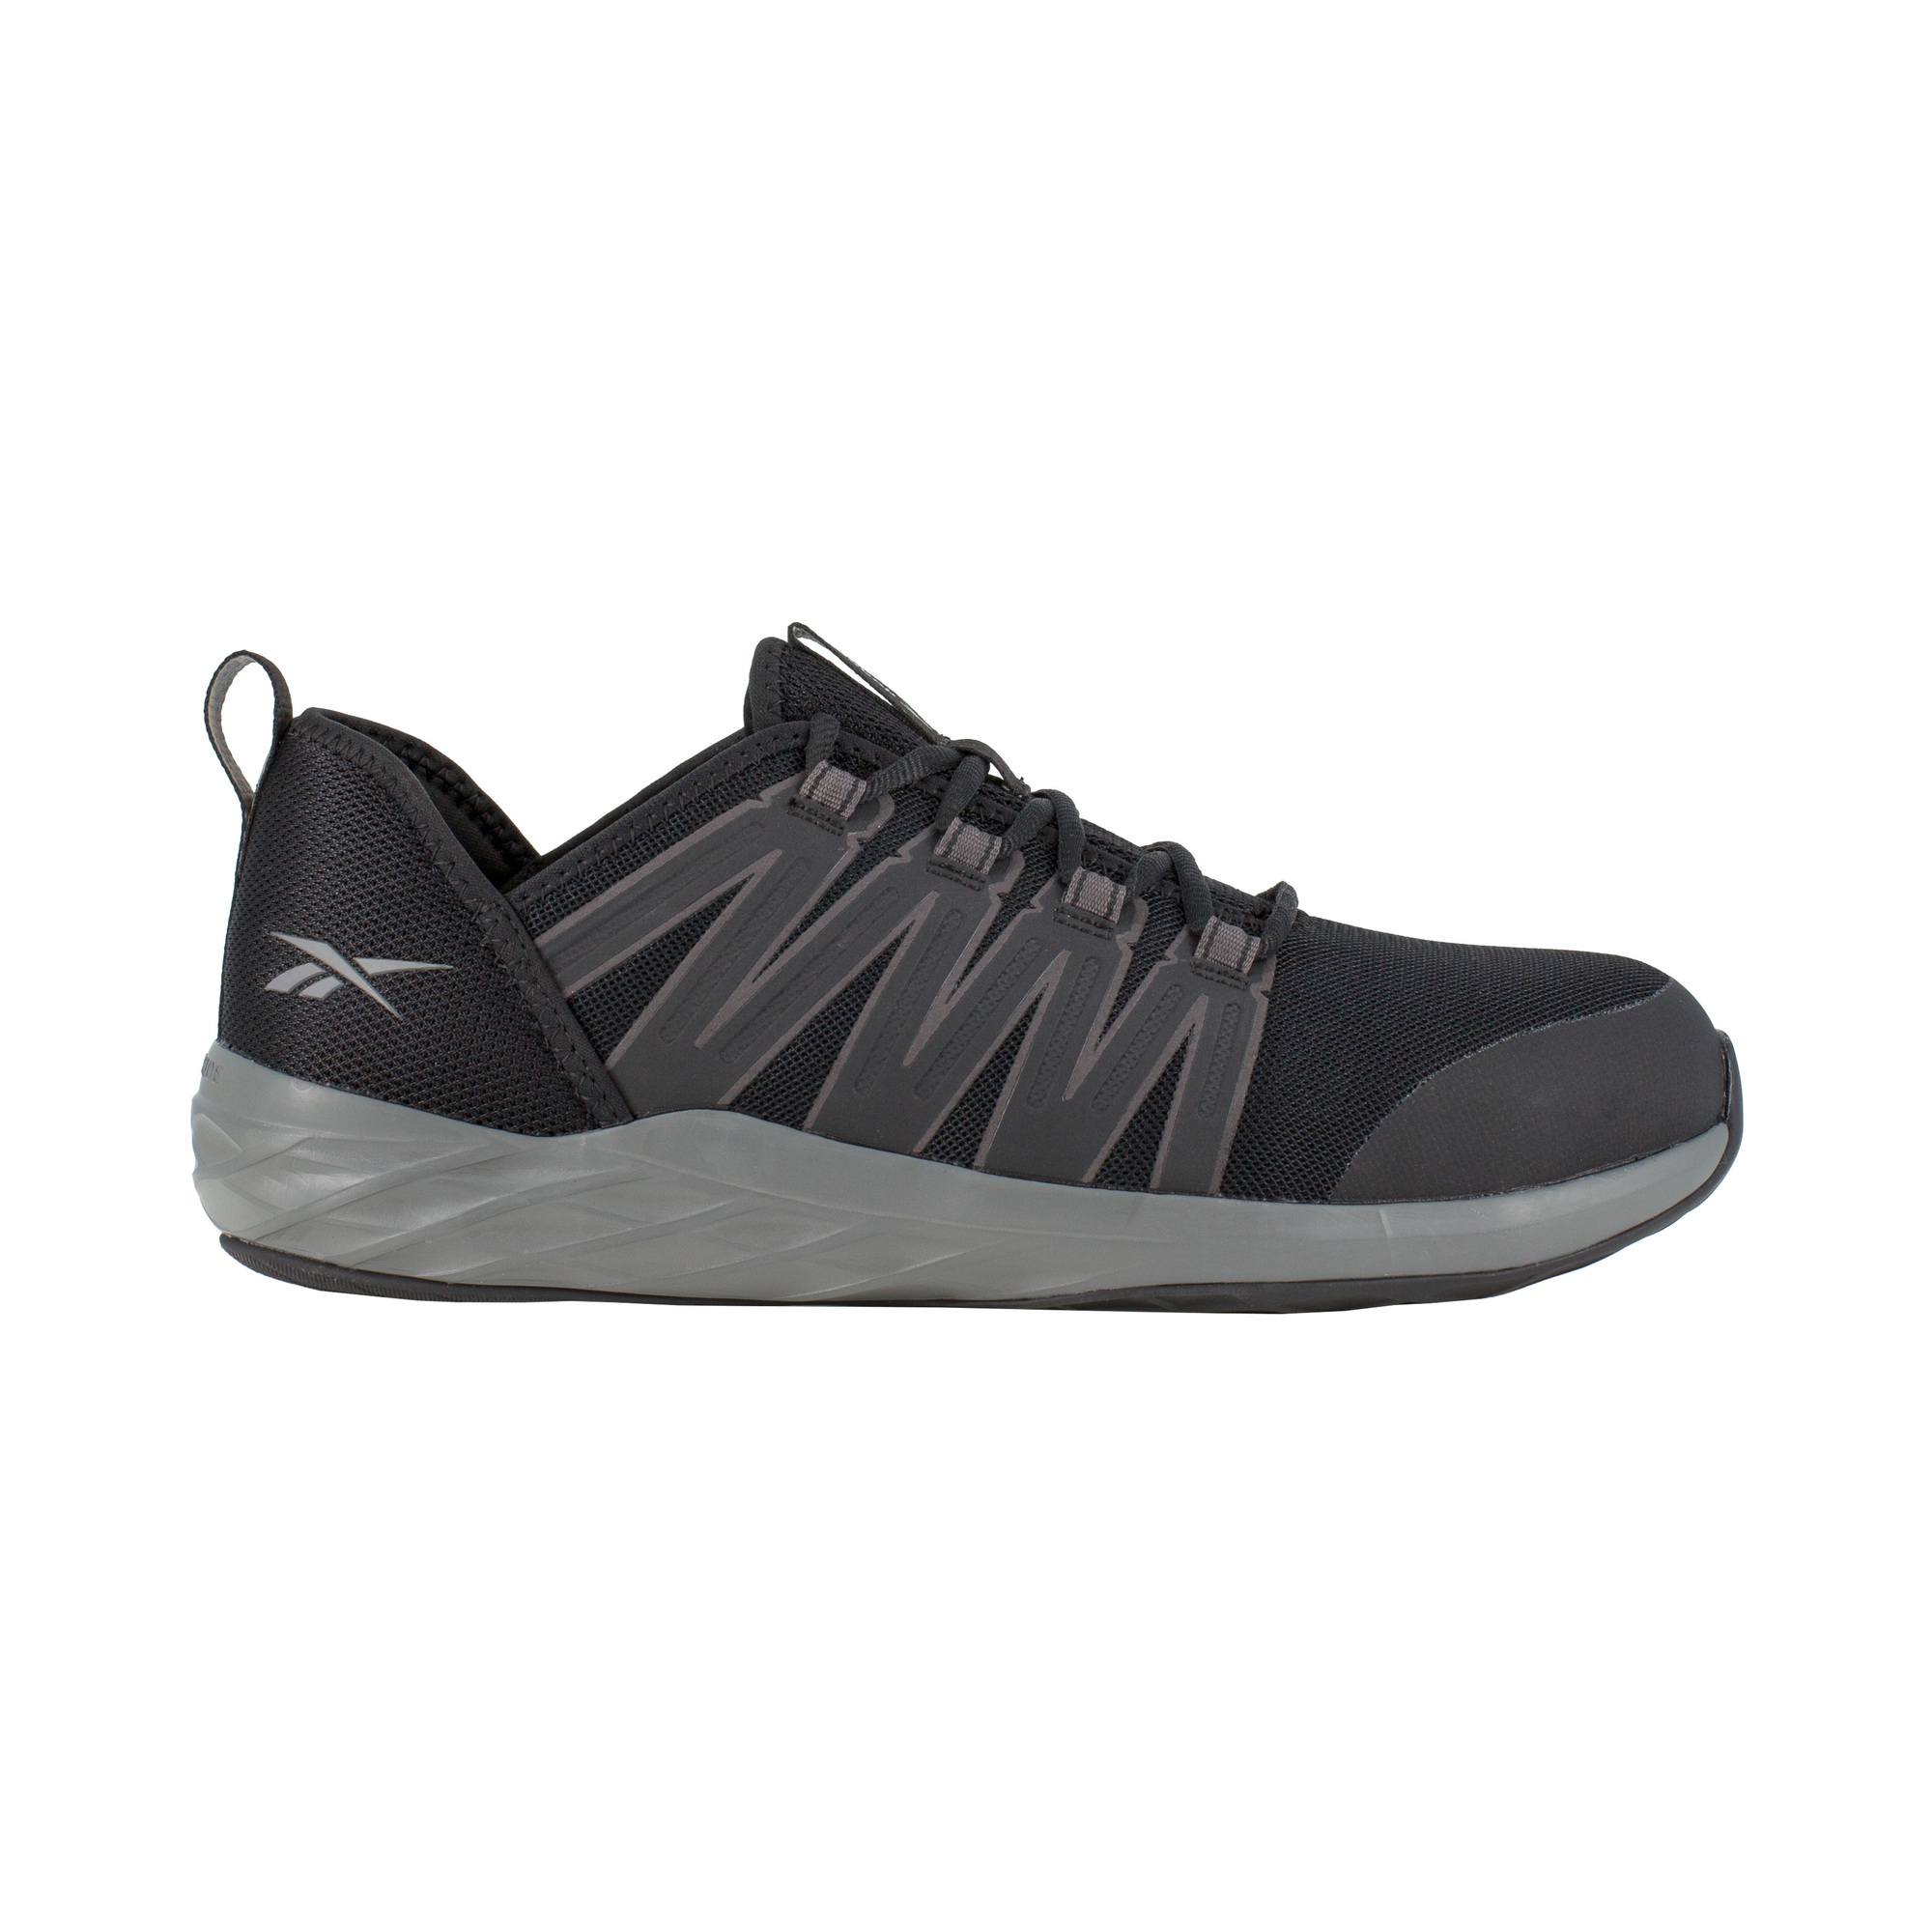 Reebok, Athletic Work Shoe, Size 6, Width Medium, Color Black and Dark Grey, Model RB211